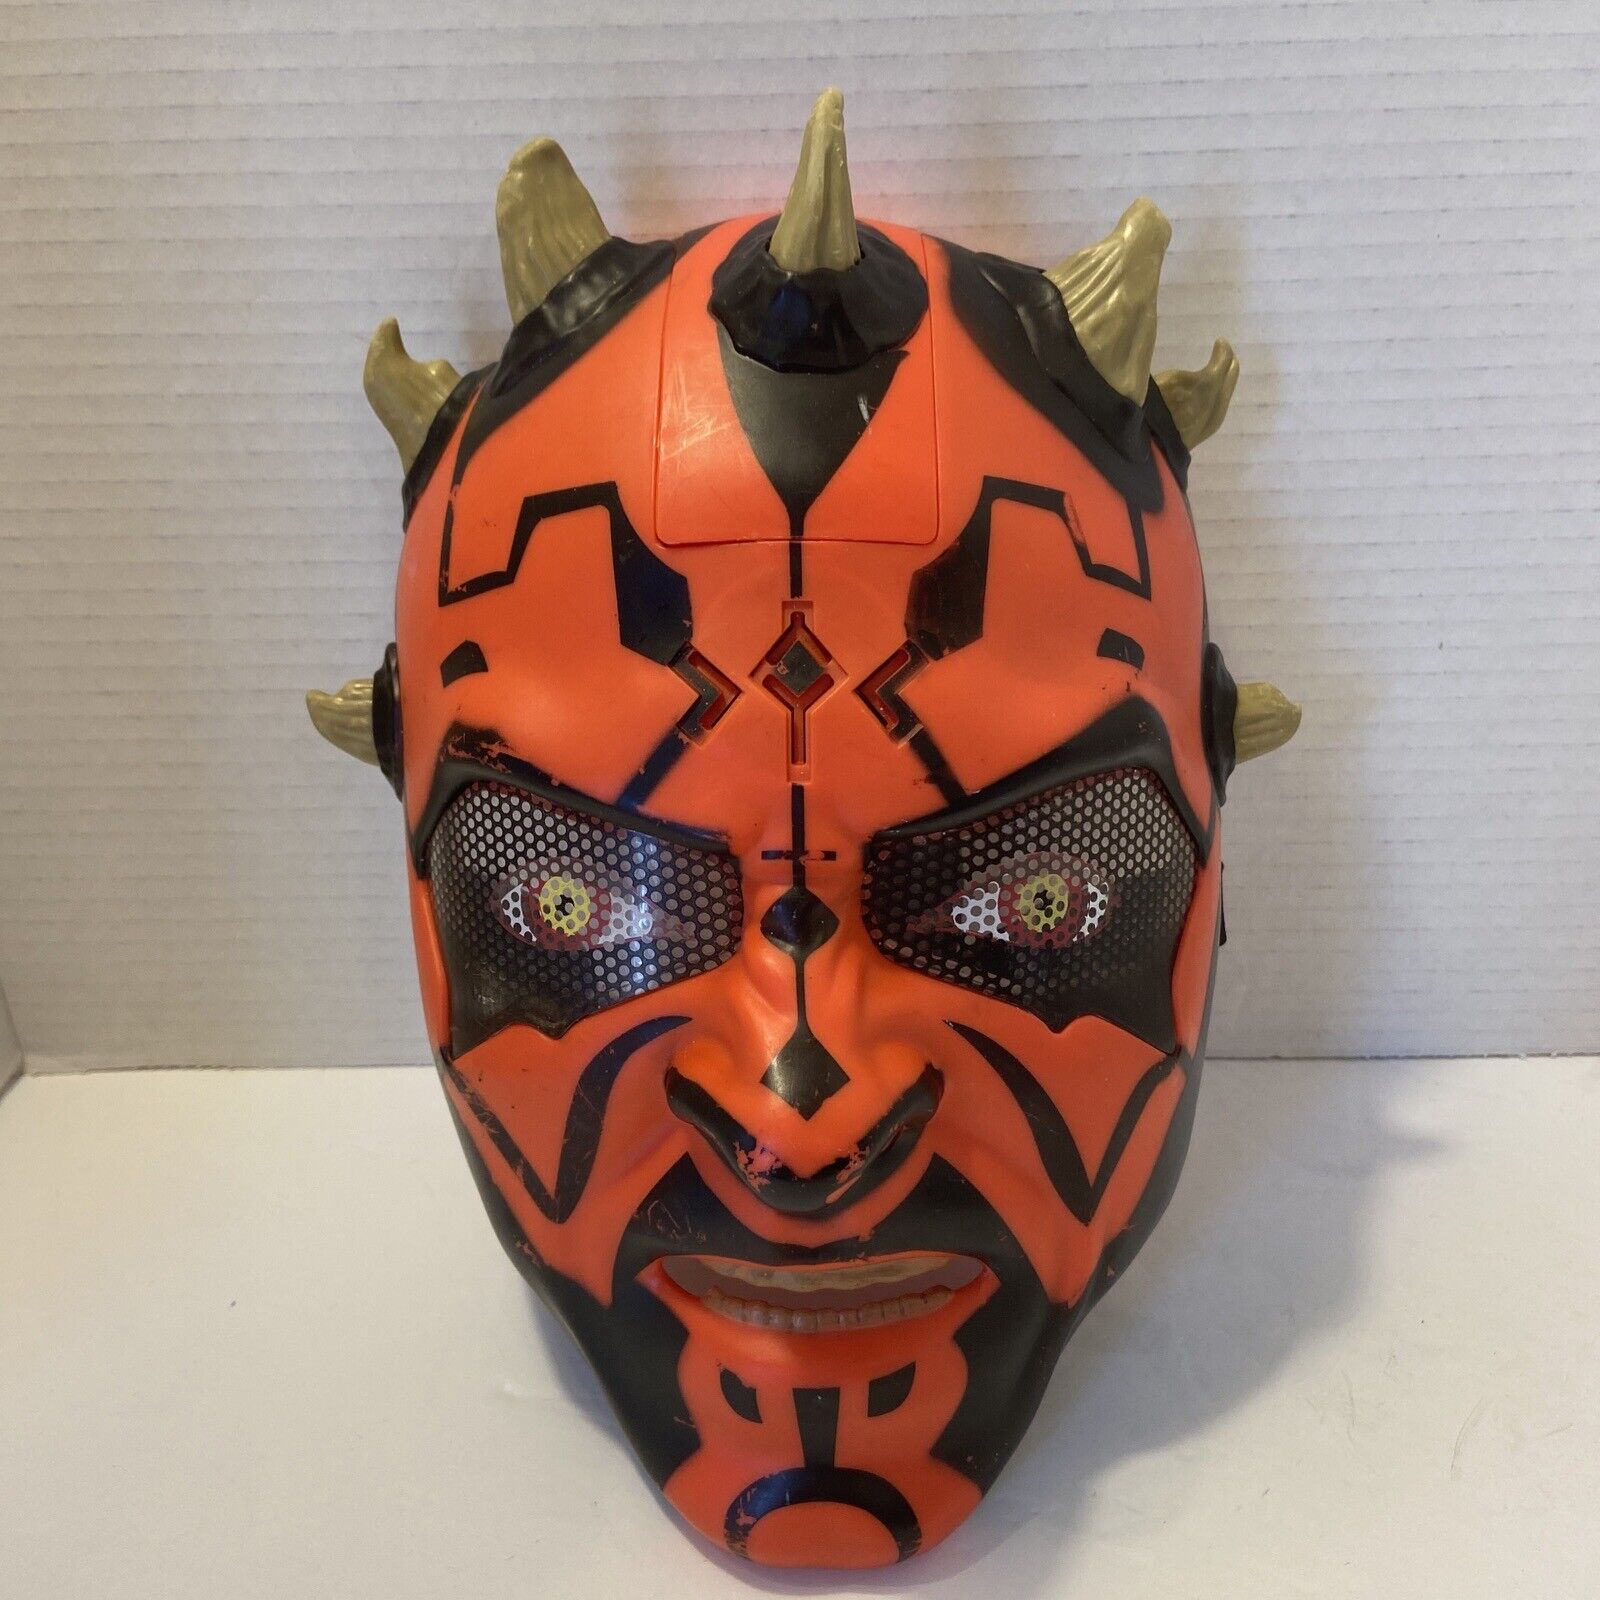 Darth Maul Star Wars 2011 Talking Adjustable Mask Halloween Costume Hasbro WORKS